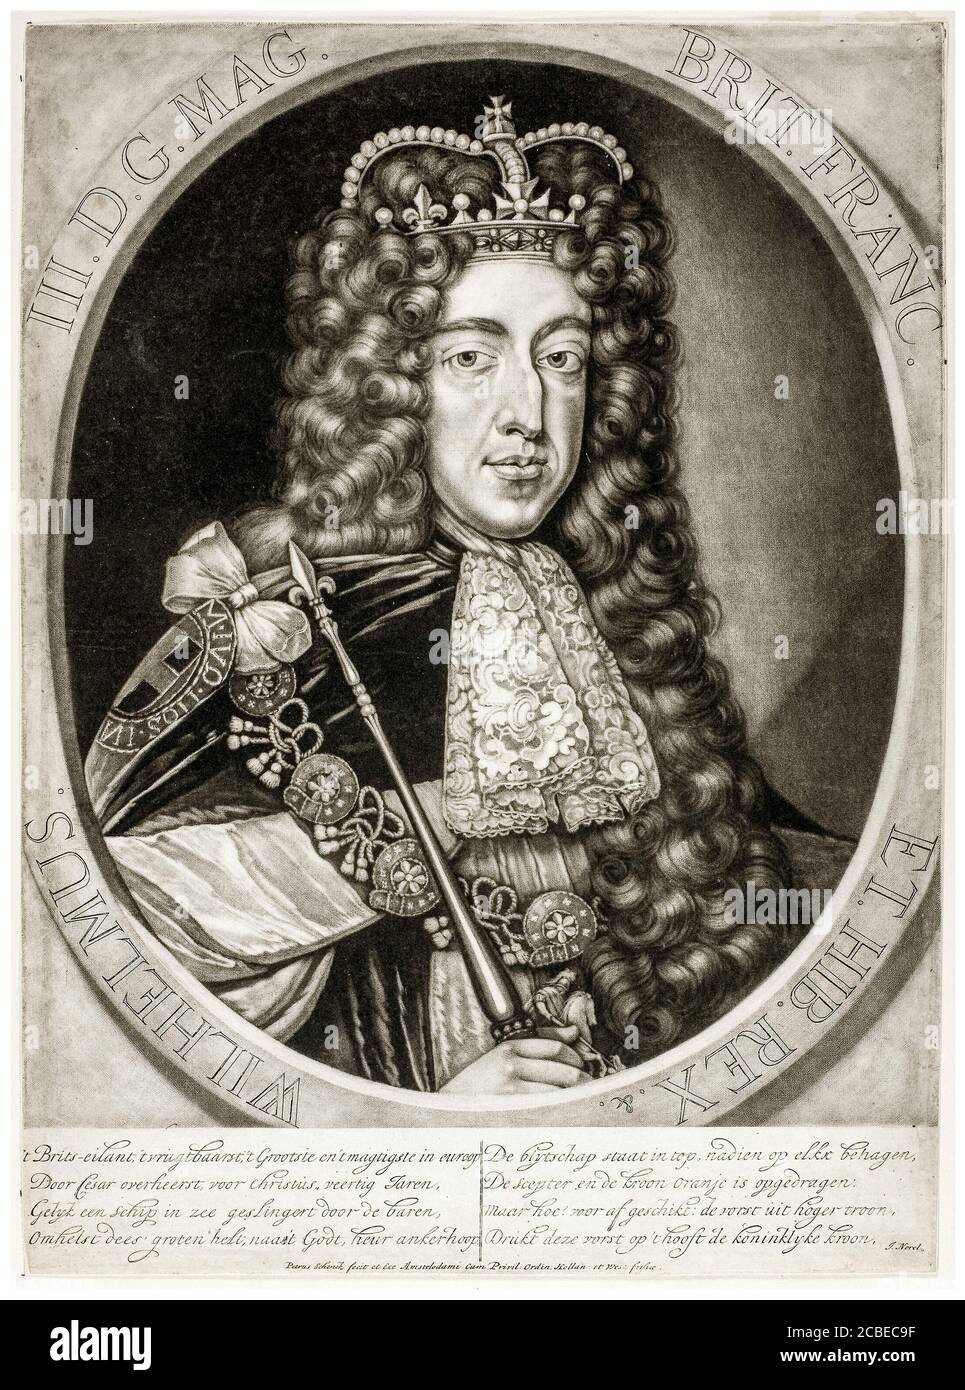 William III (1650-1702), roi d'Angleterre, gravure de portrait par Pieter Schenk, 1690-1699 Banque D'Images